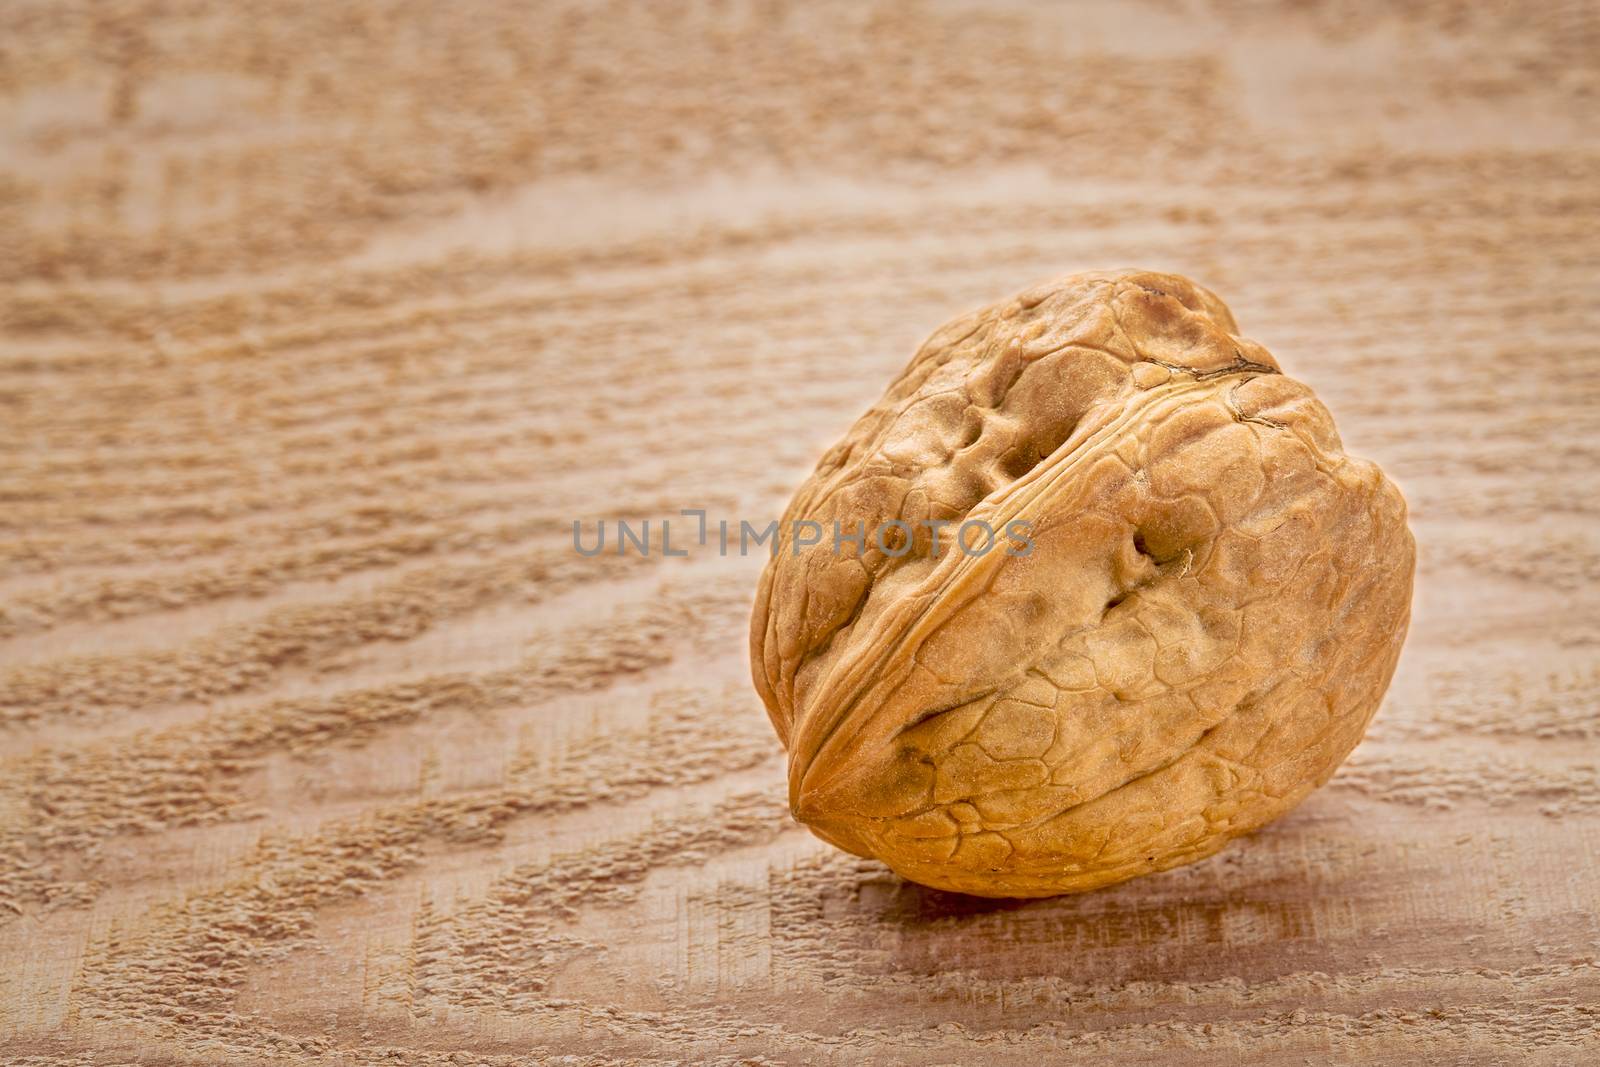 English walnut on wood by PixelsAway